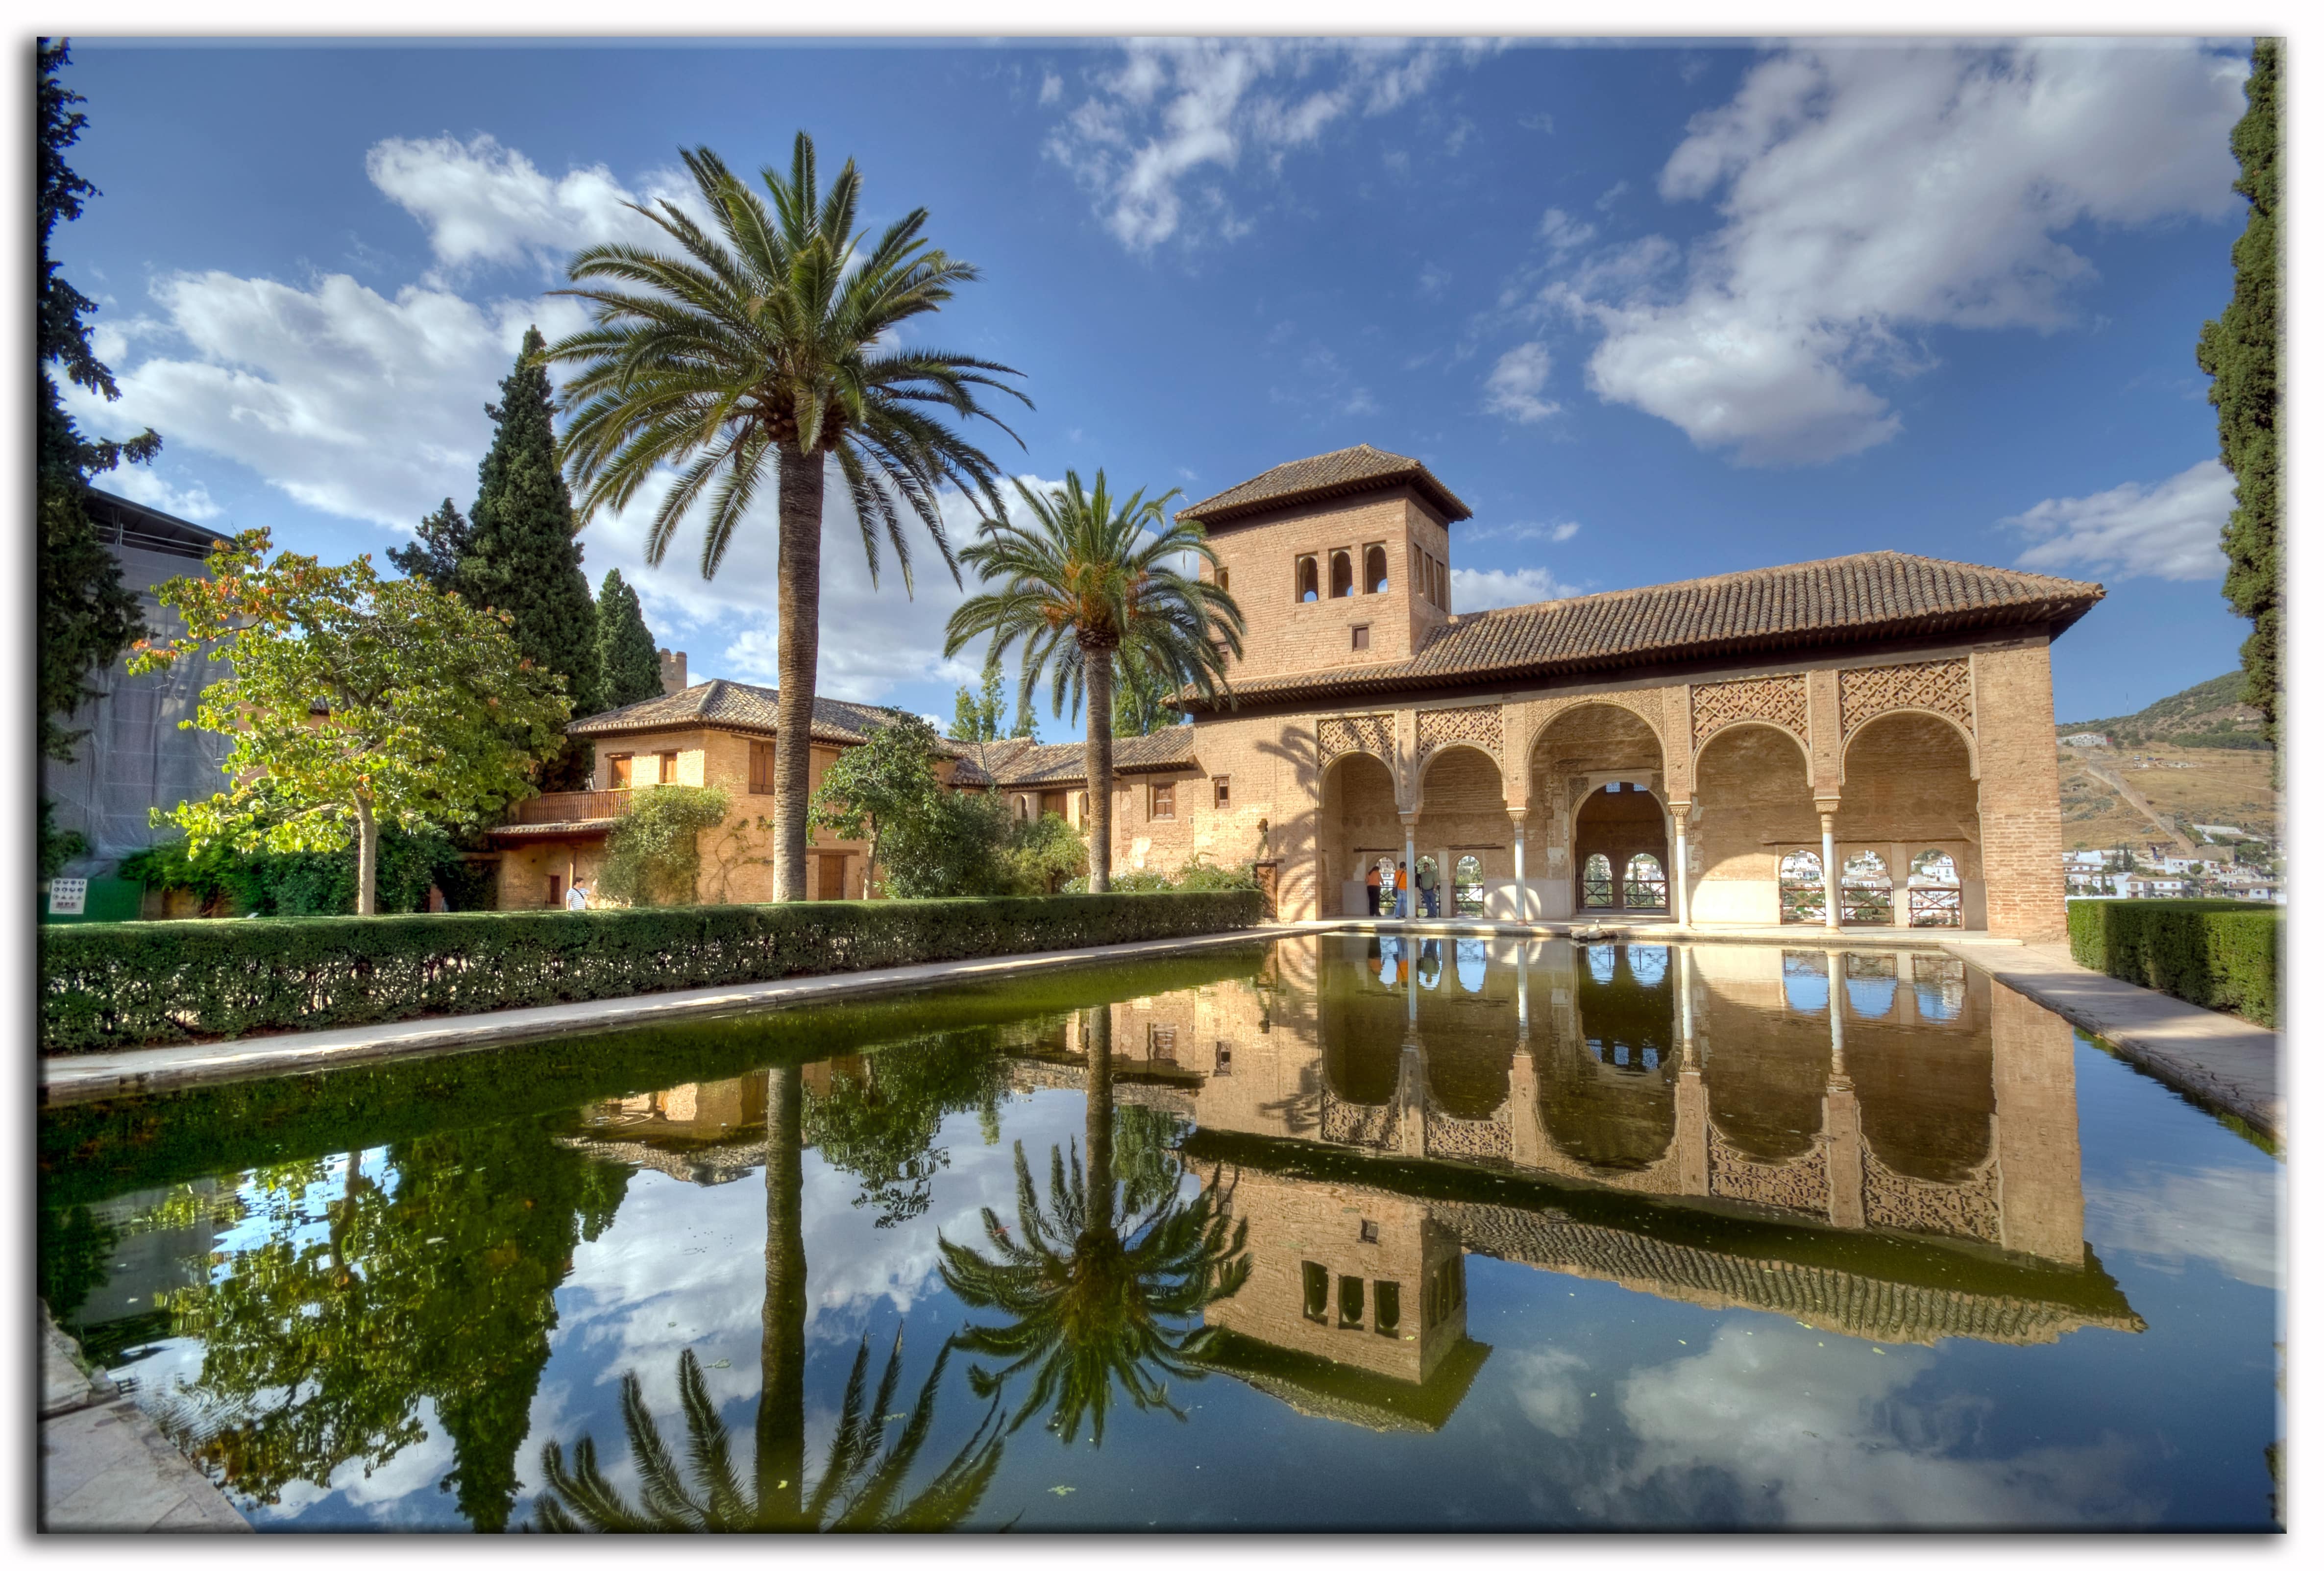 El Partal, La Alhambra de Granada.